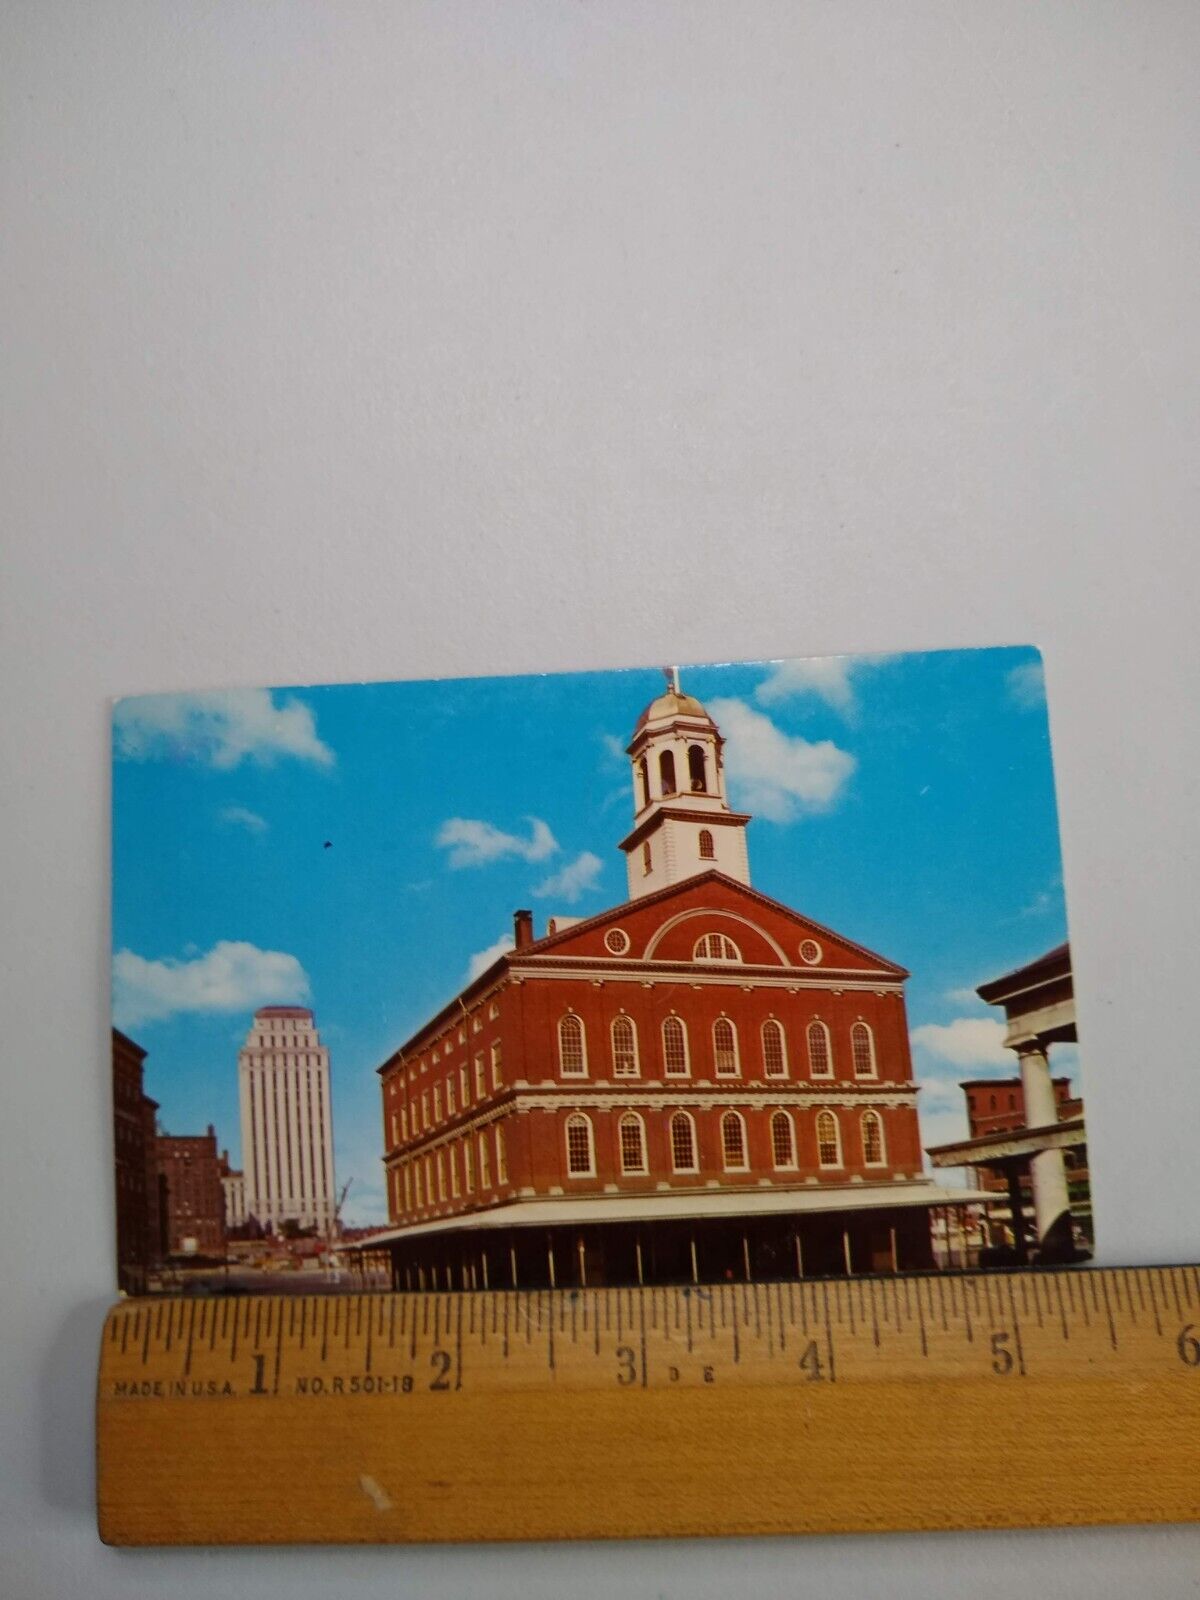 Postcard - Faneuil Hall - Dock Square, Boston, Massachusetts